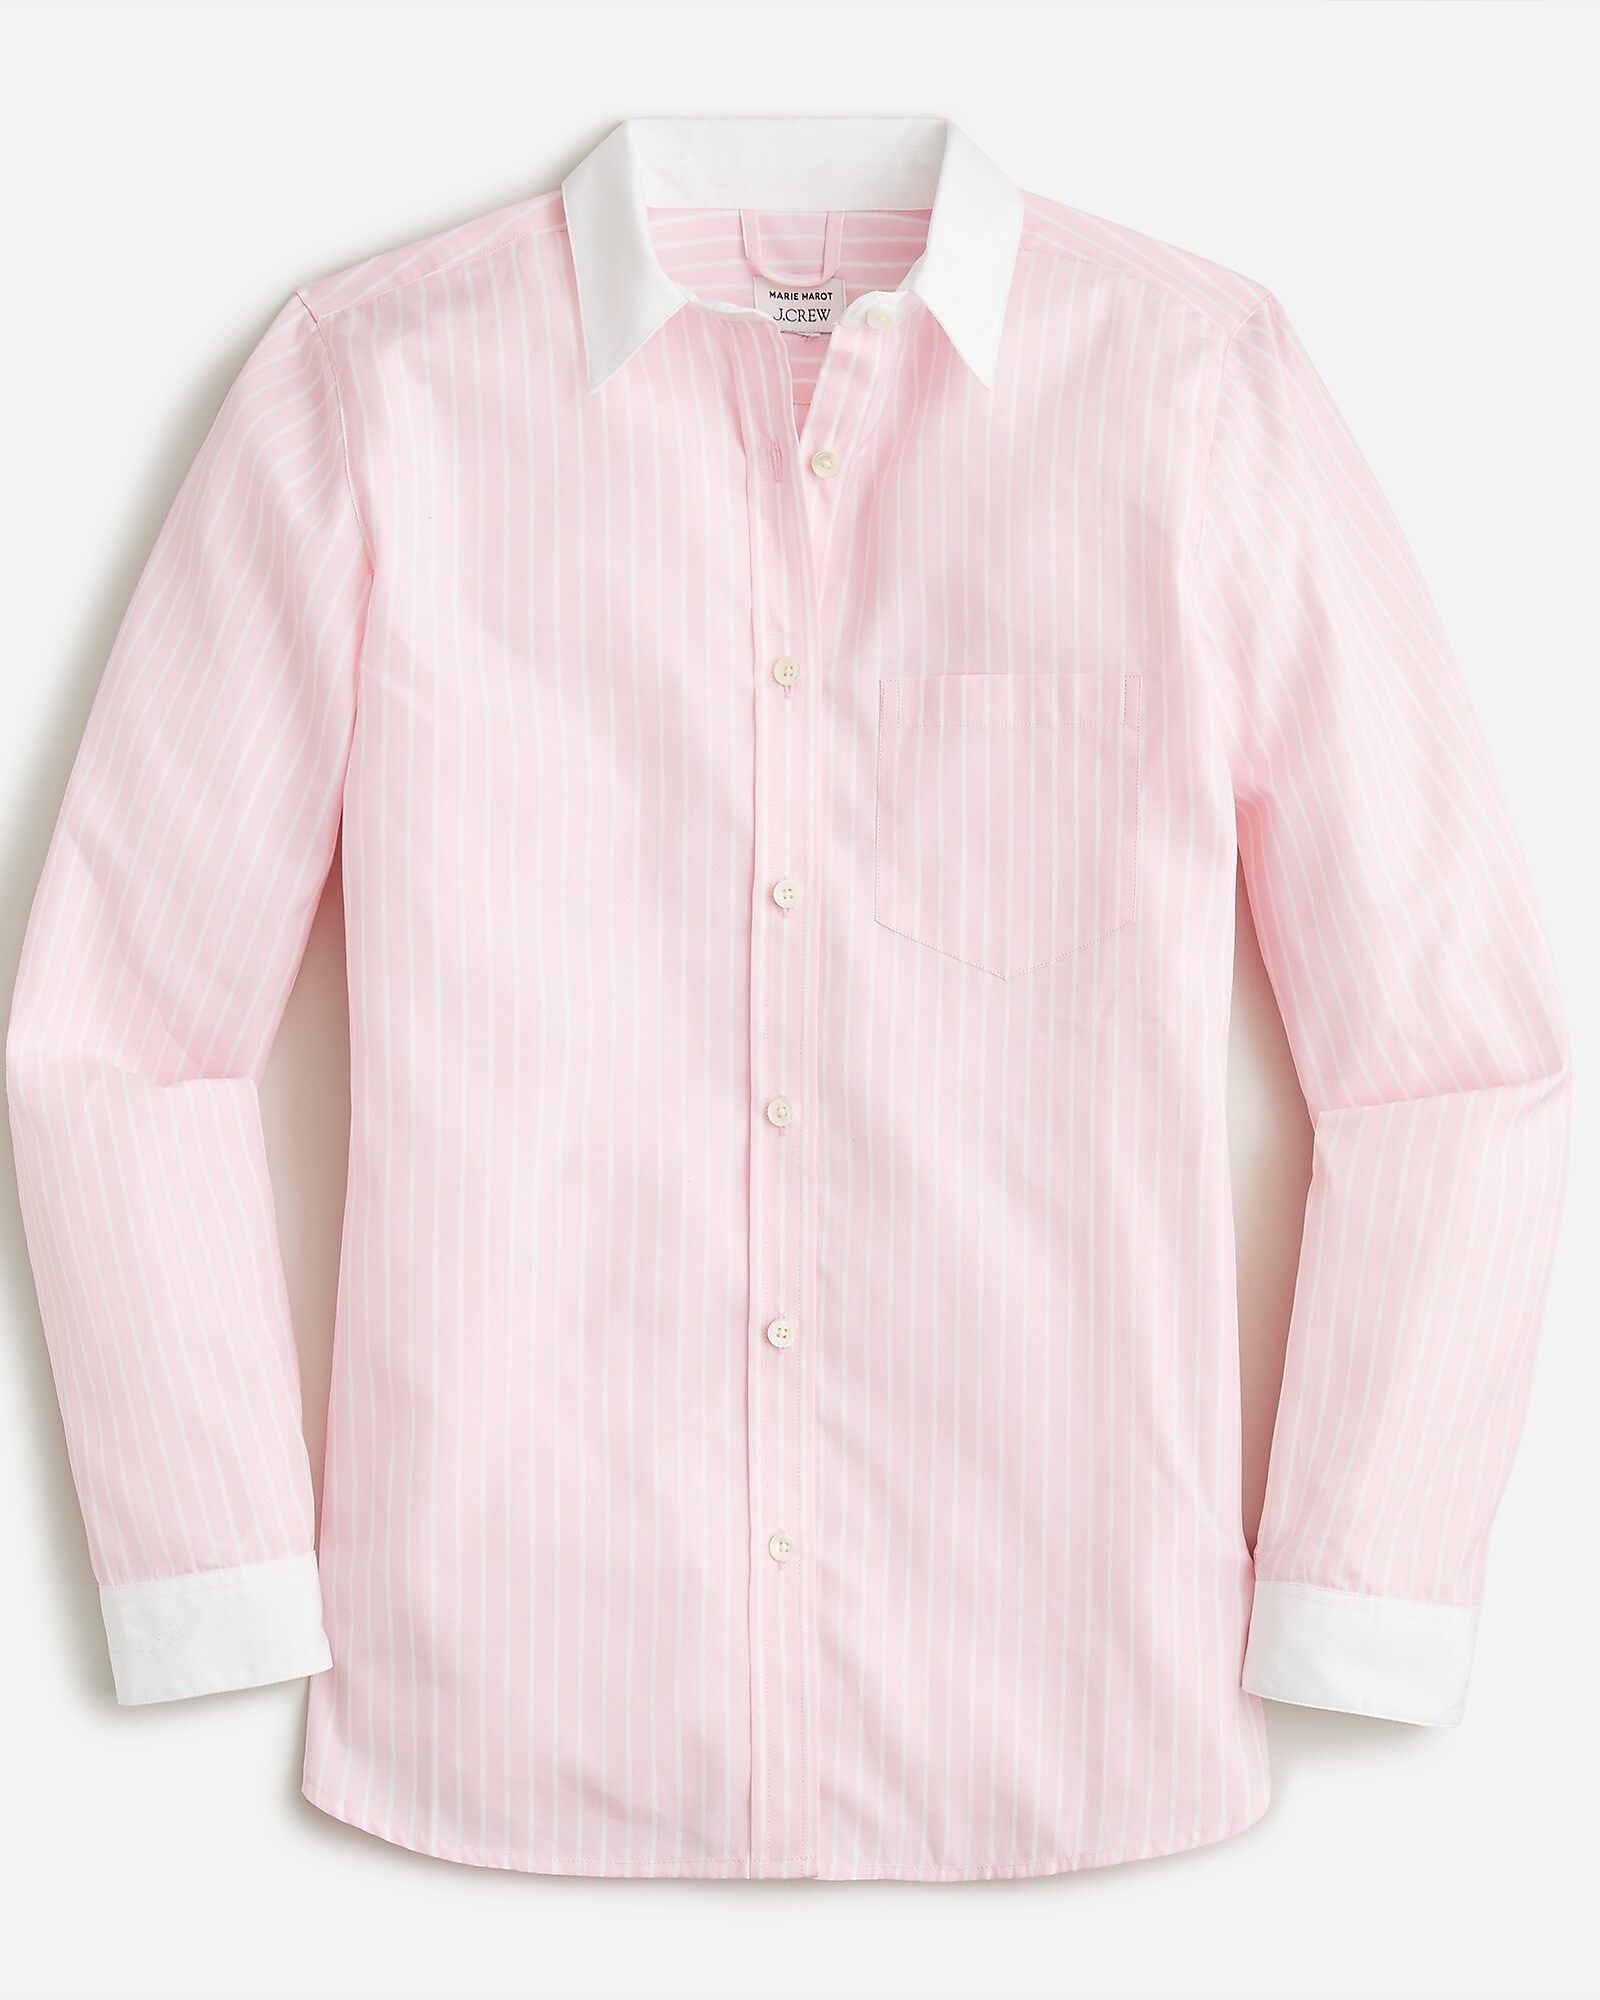 Limited-edition Marie Marot X J.Crew shirt in Thomas Mason® cotton poplin | J.Crew US